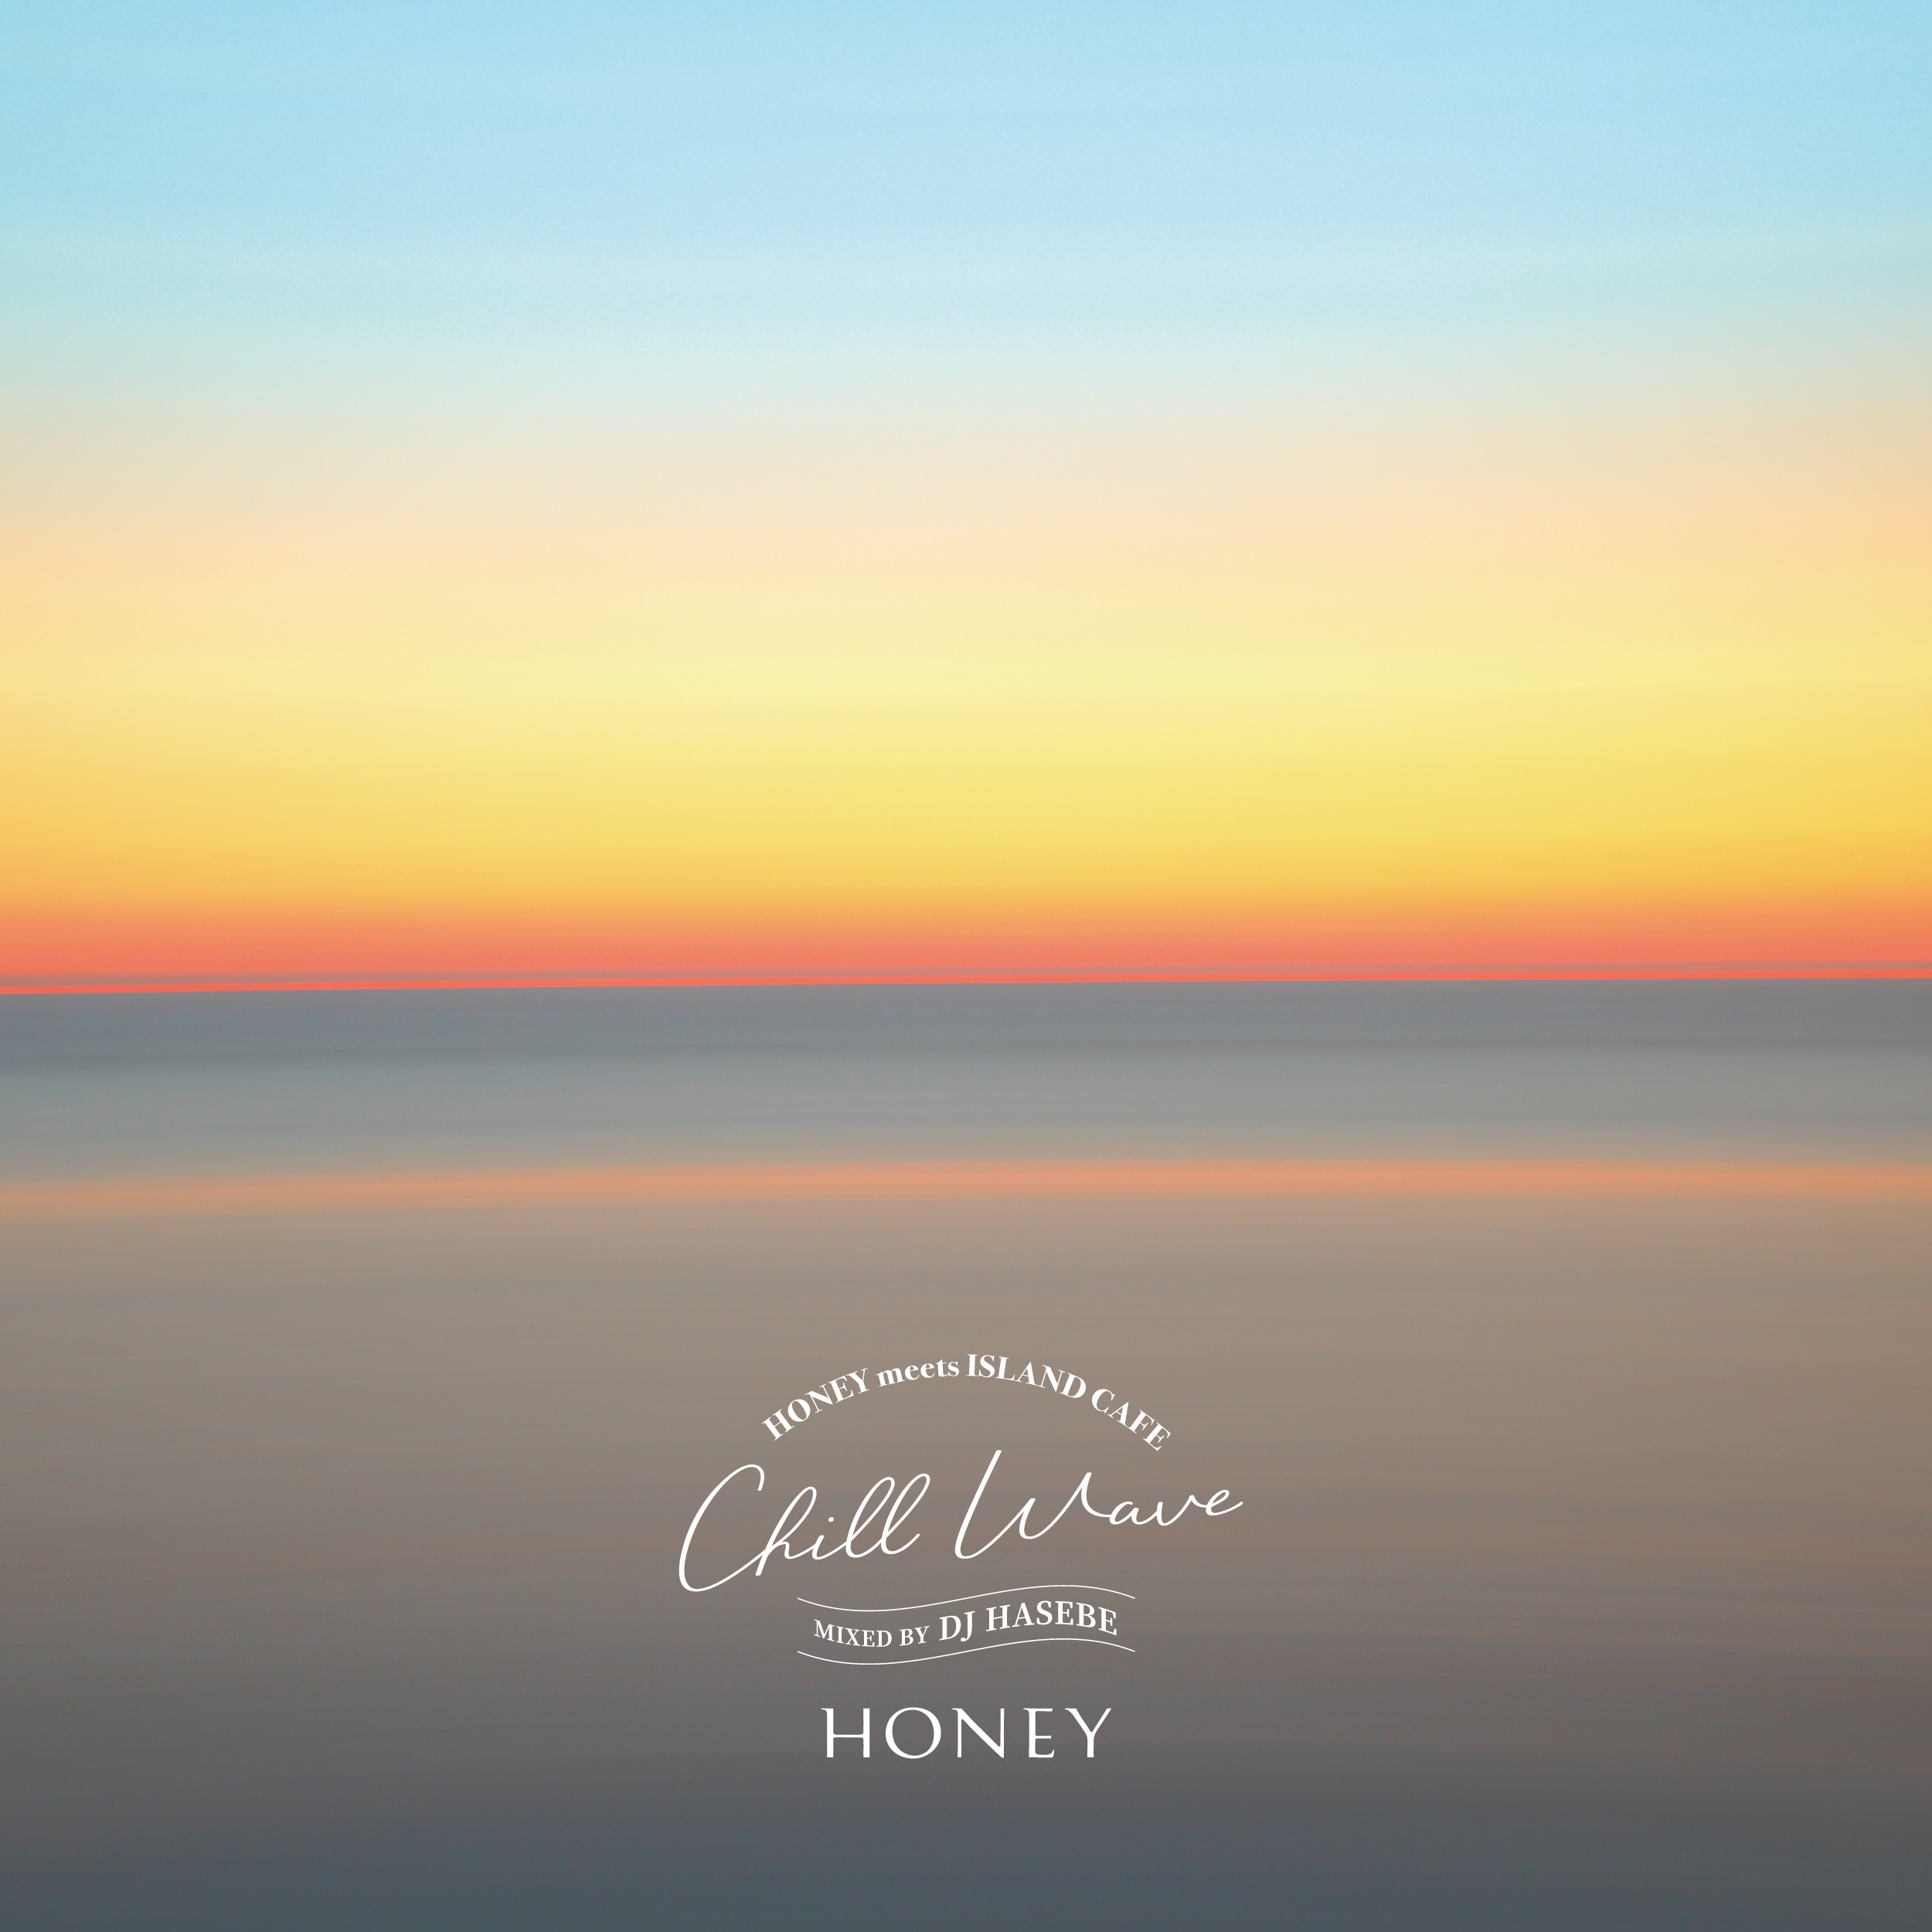 Honey Meets Island Cafe Chill Wave Mixed By Dj Hasebe 9月19日 木 発売 インセンスミュージックワークス Insense Music Works Inc